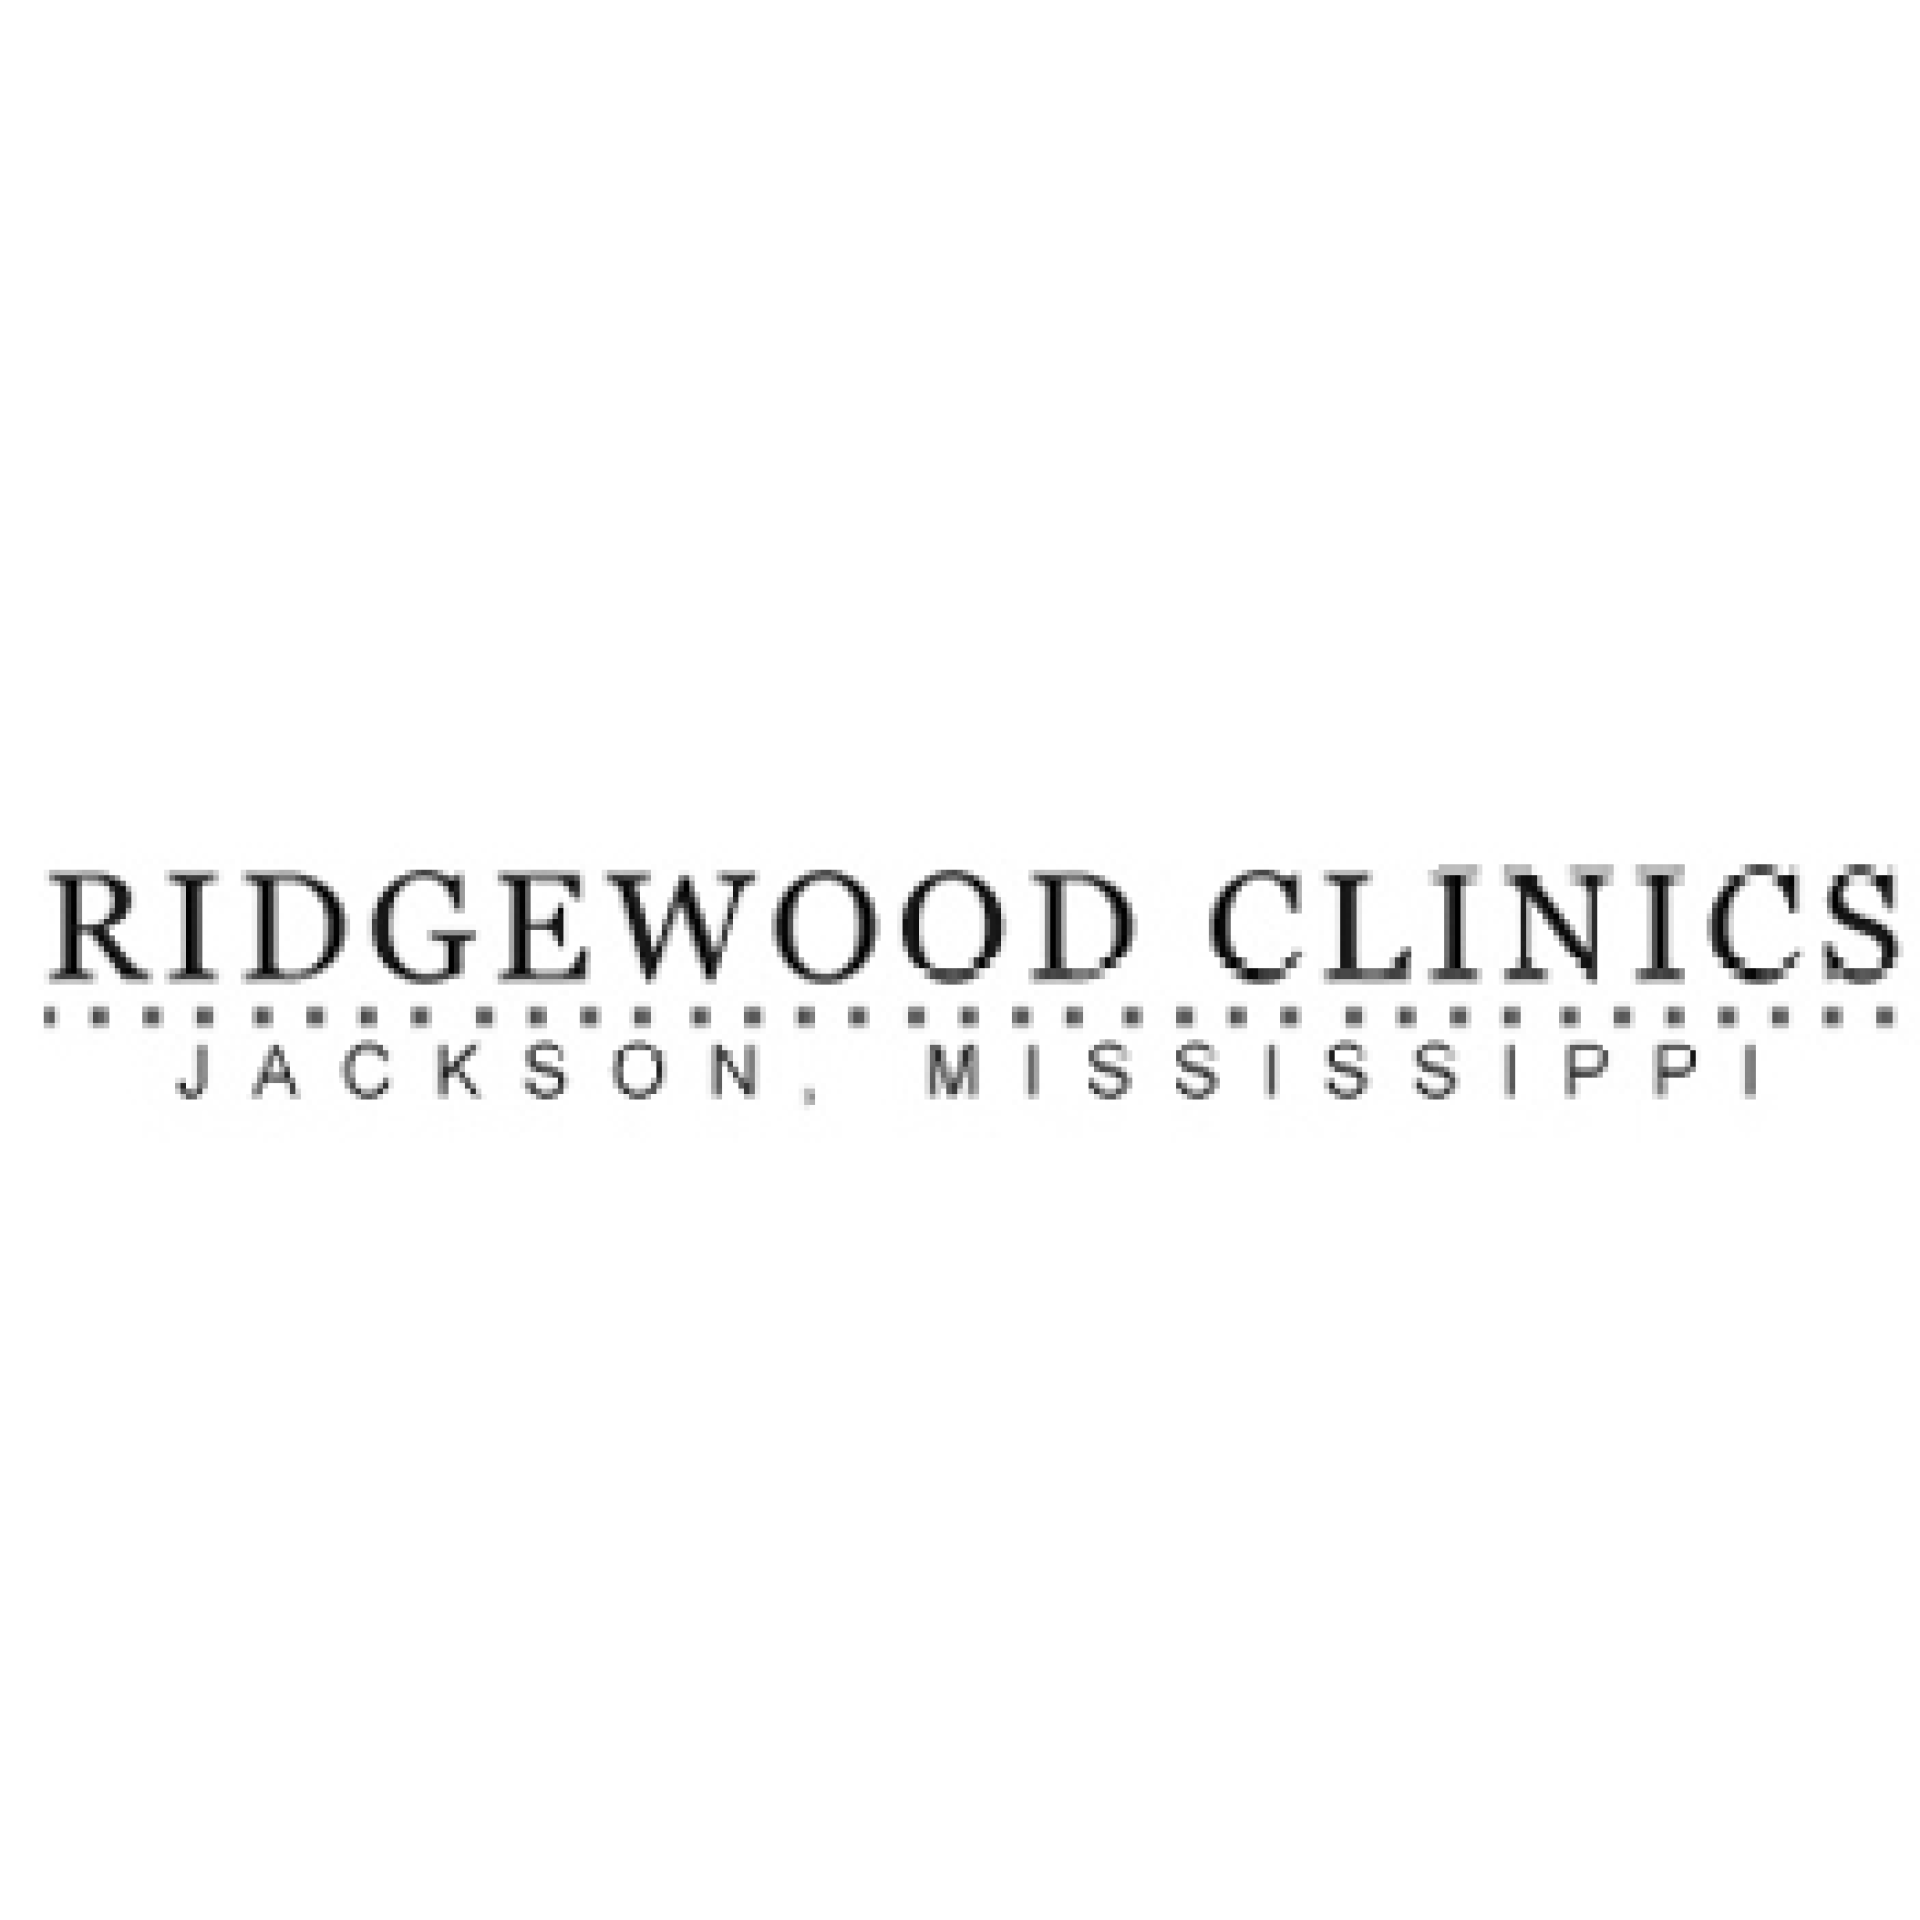 Ridgewood Clinics - Jackson, MS 39211 - (601)957-3211 | ShowMeLocal.com